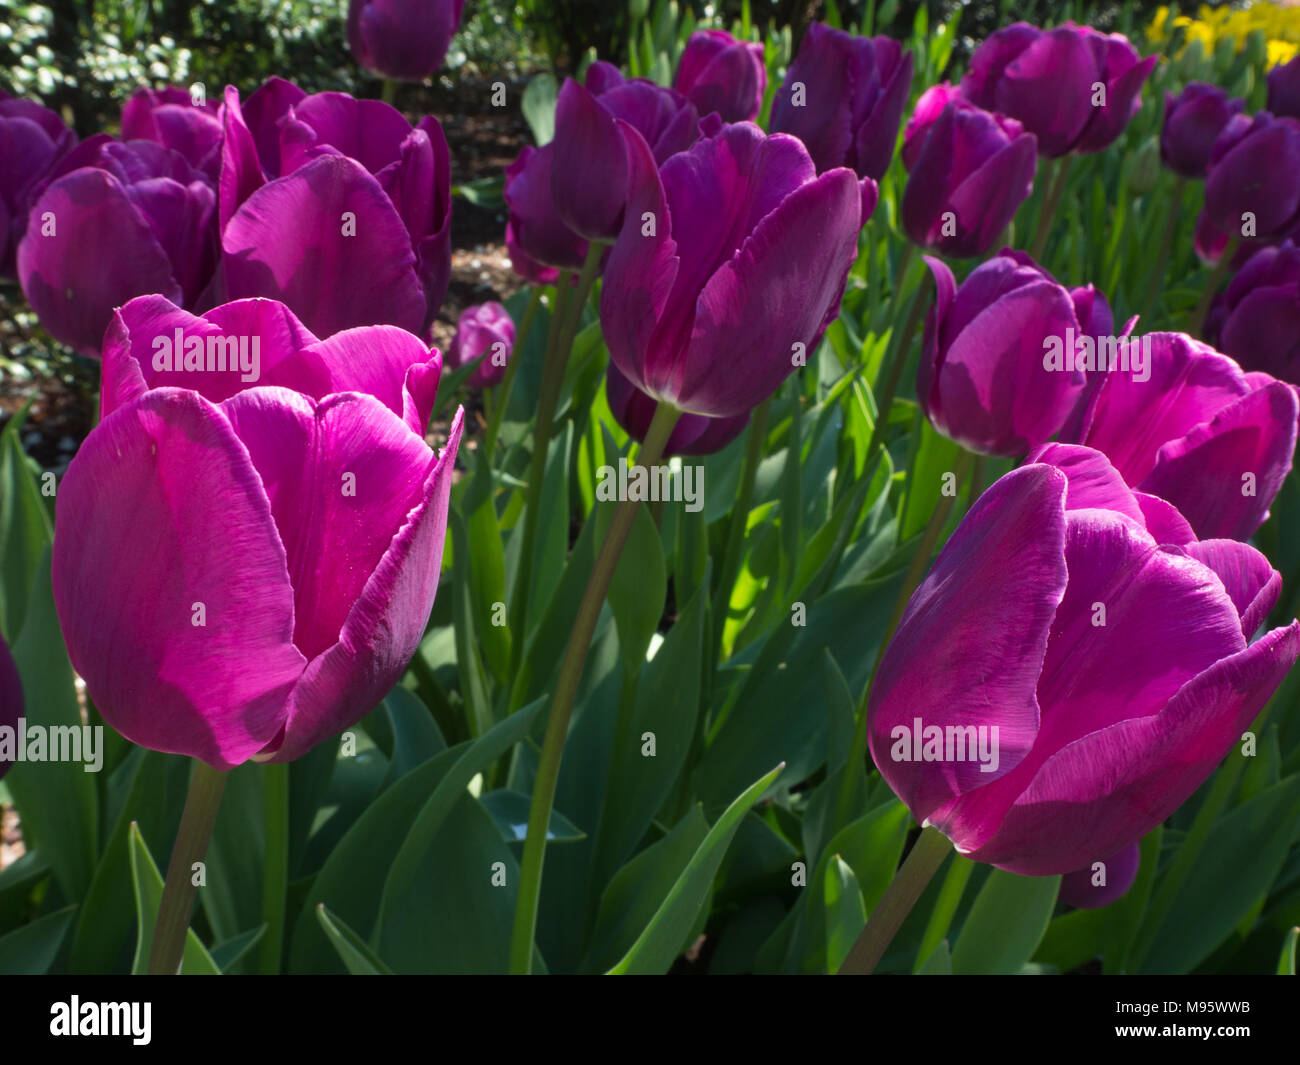 Sun shines on magenta tulips in the Conservatory garden Stock Photo